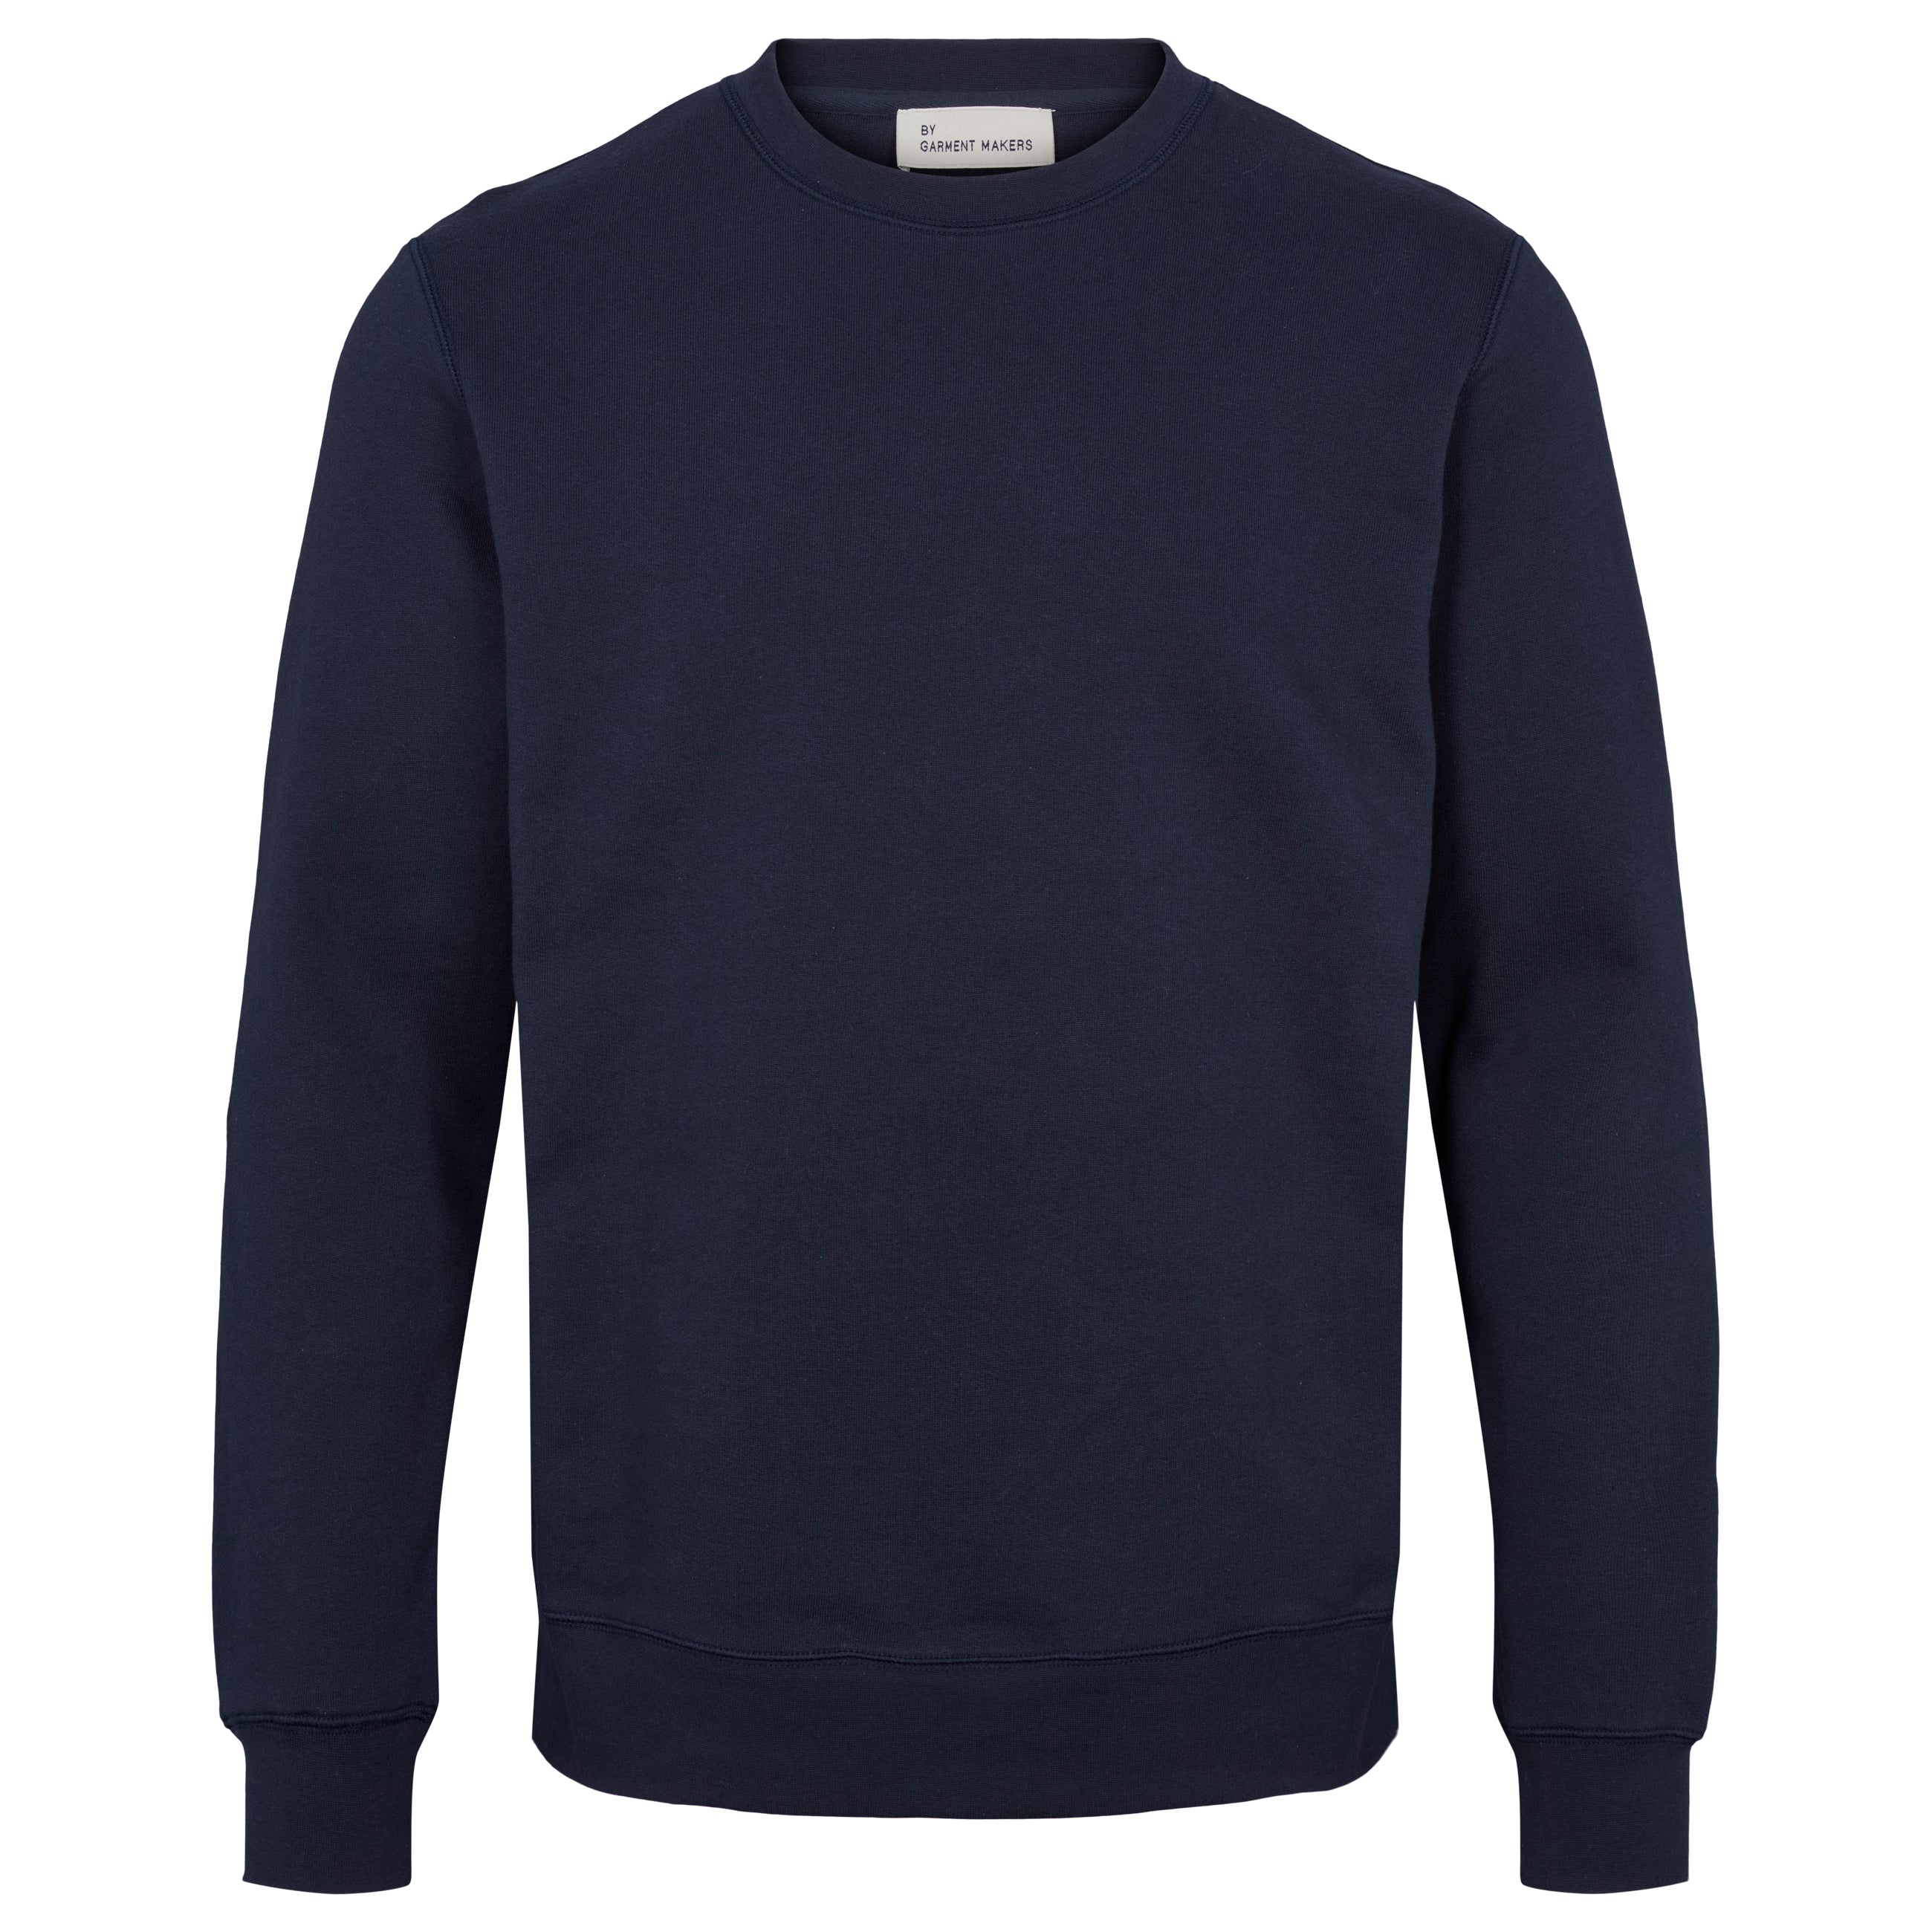 By Garment Makers The Organic Sweatshirt GOTS Sweatshirt 3096 Navy Blazer